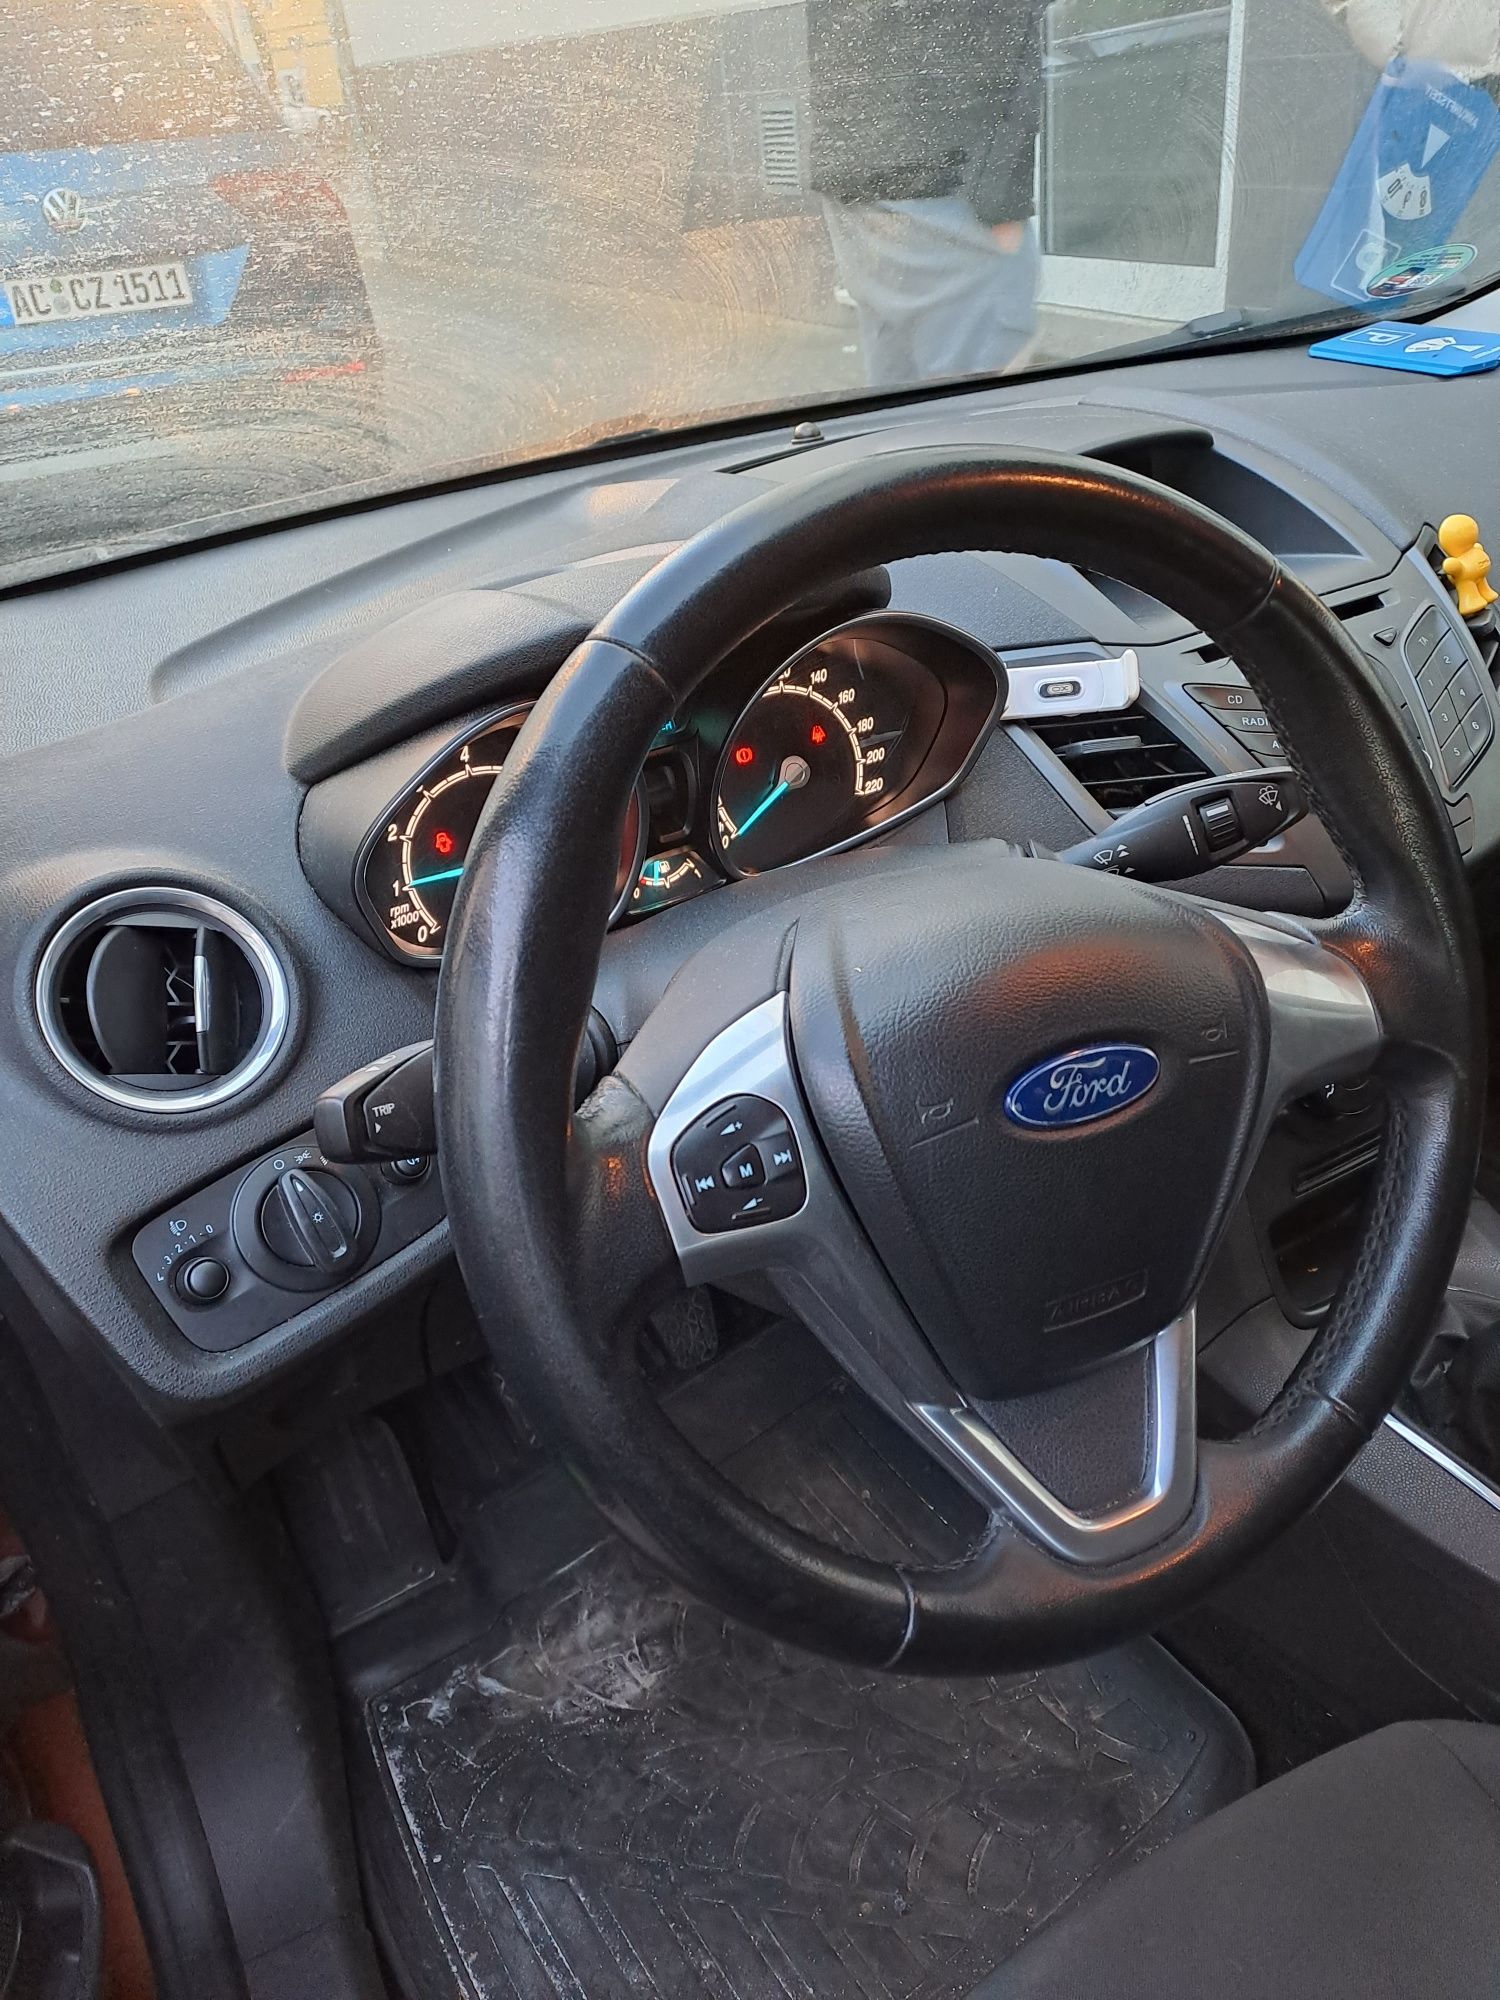 Ford Fiesta 2013 ecoboost